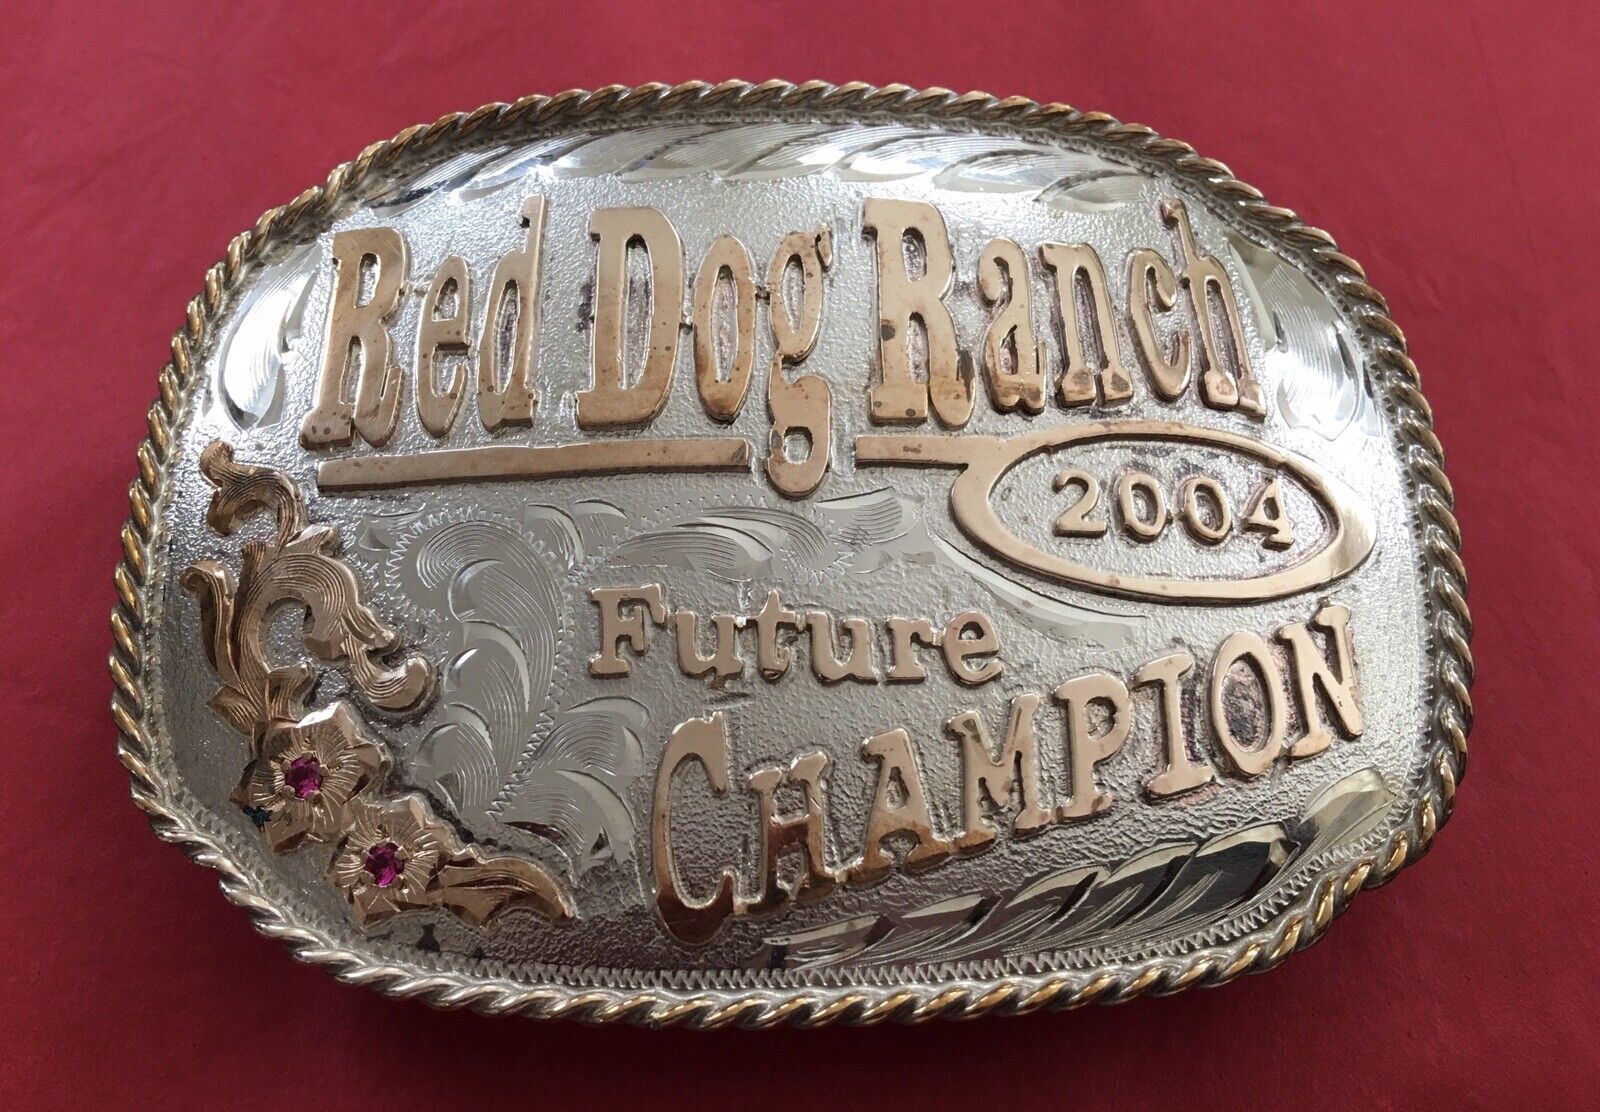 SUPER SALE  Vintage 2004 RED DOG RANCH Future CHAMPION Diablo Trophy Belt Buckle